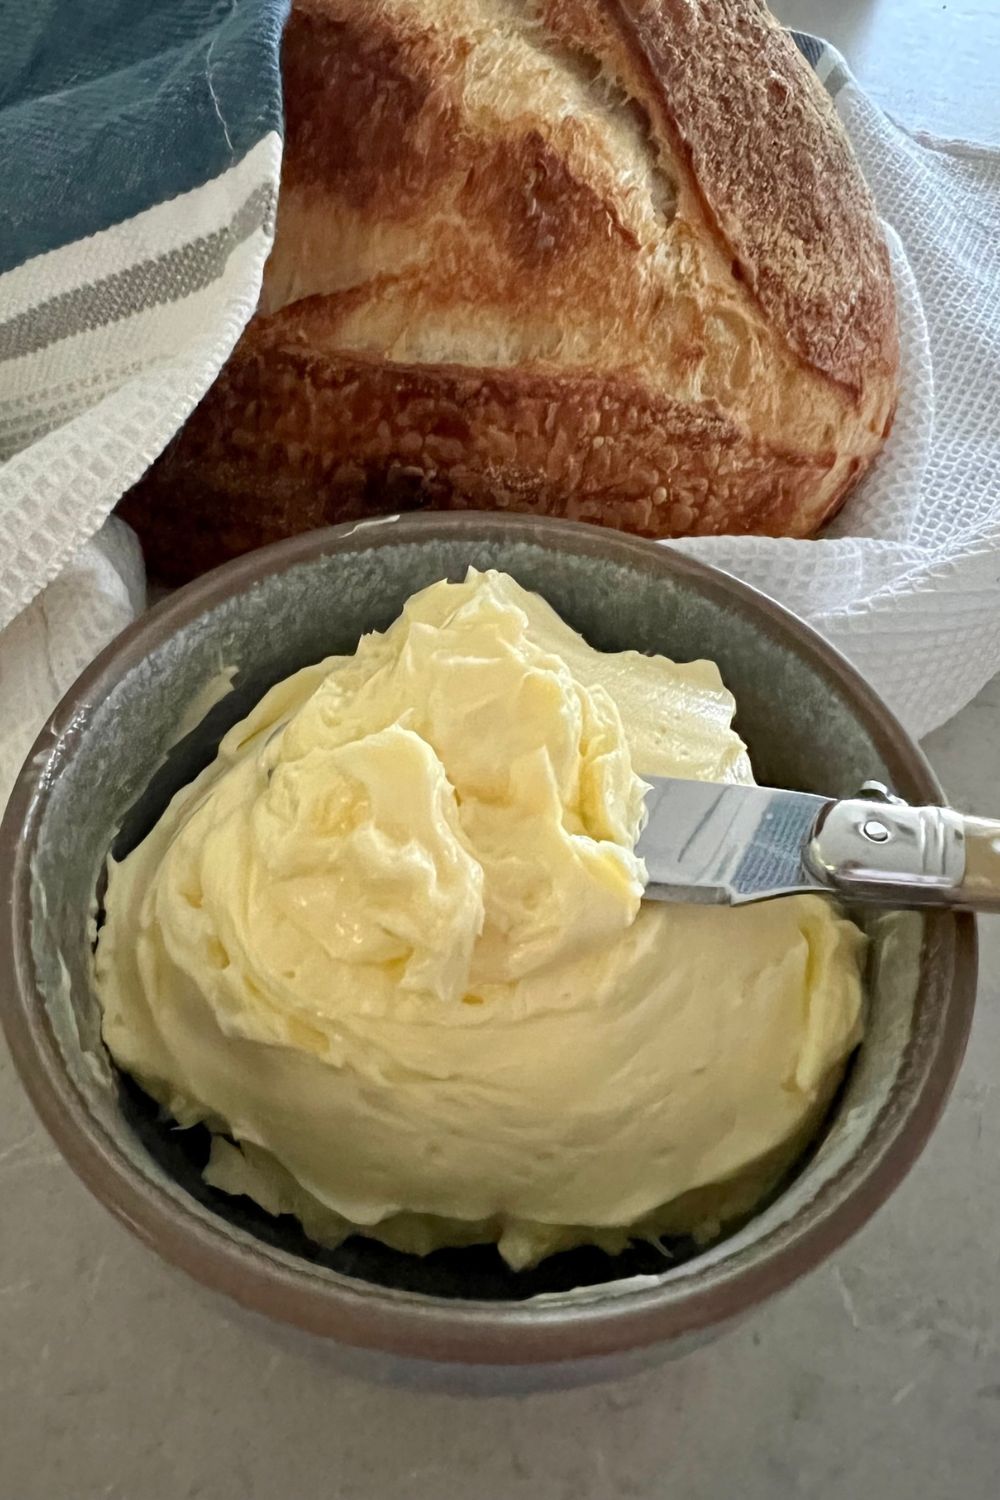 we think its a butter maker